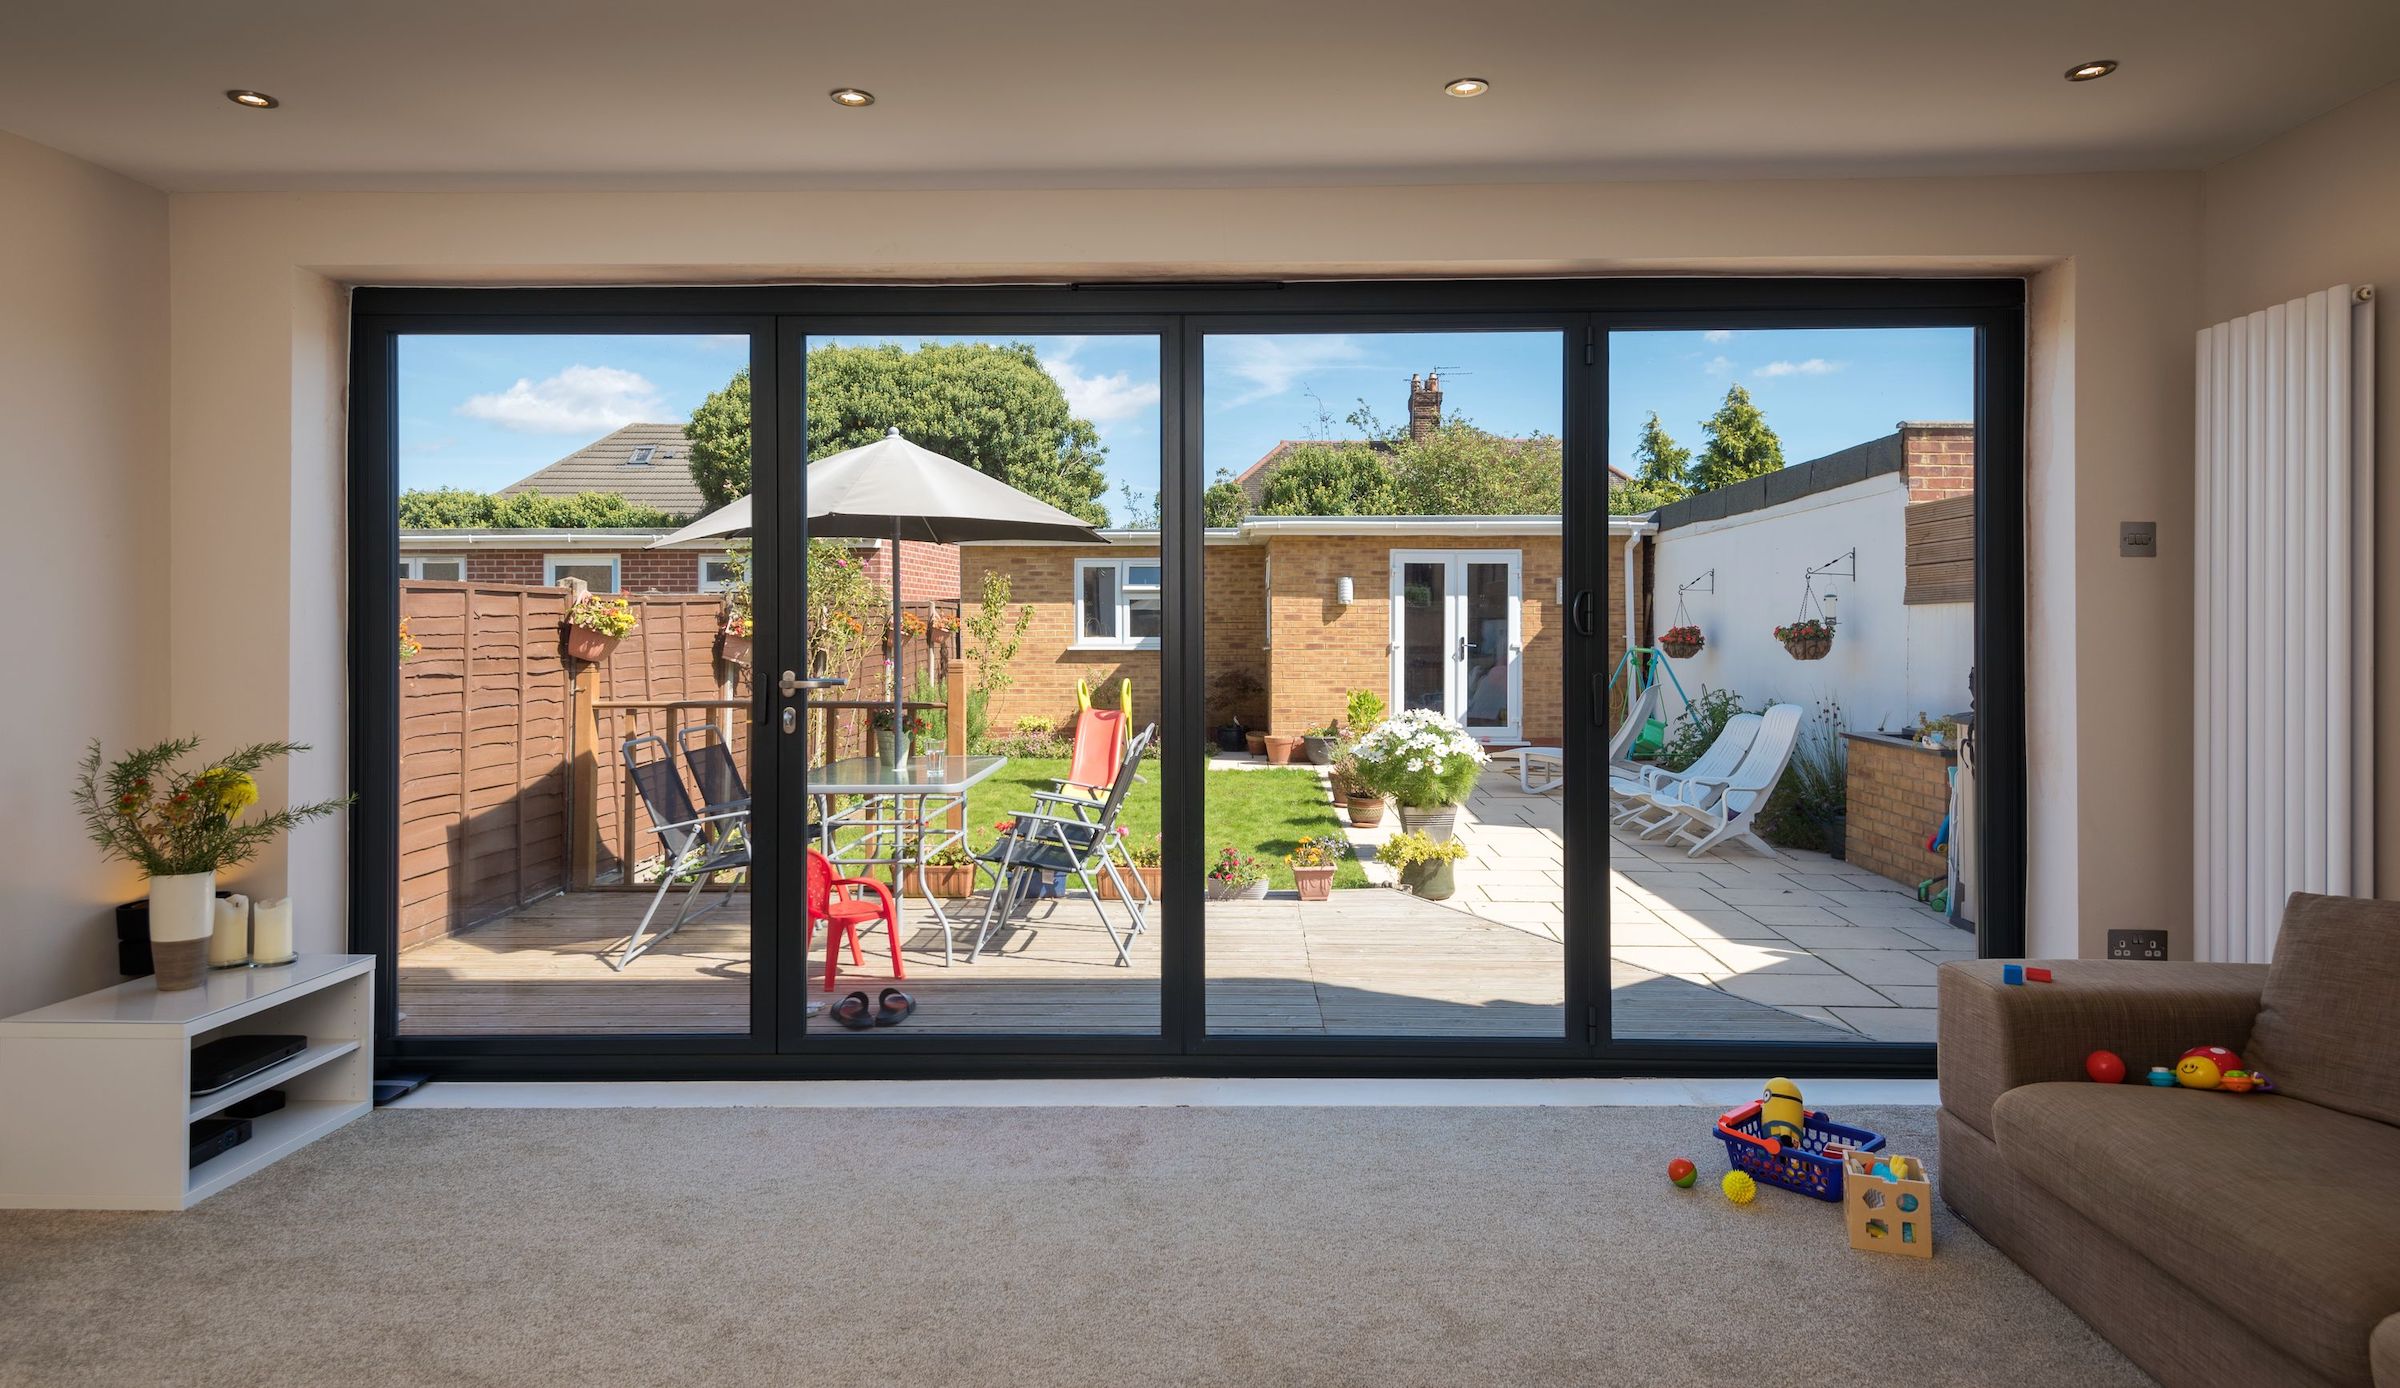 origin bifold doors in a new extension with views of a garden room